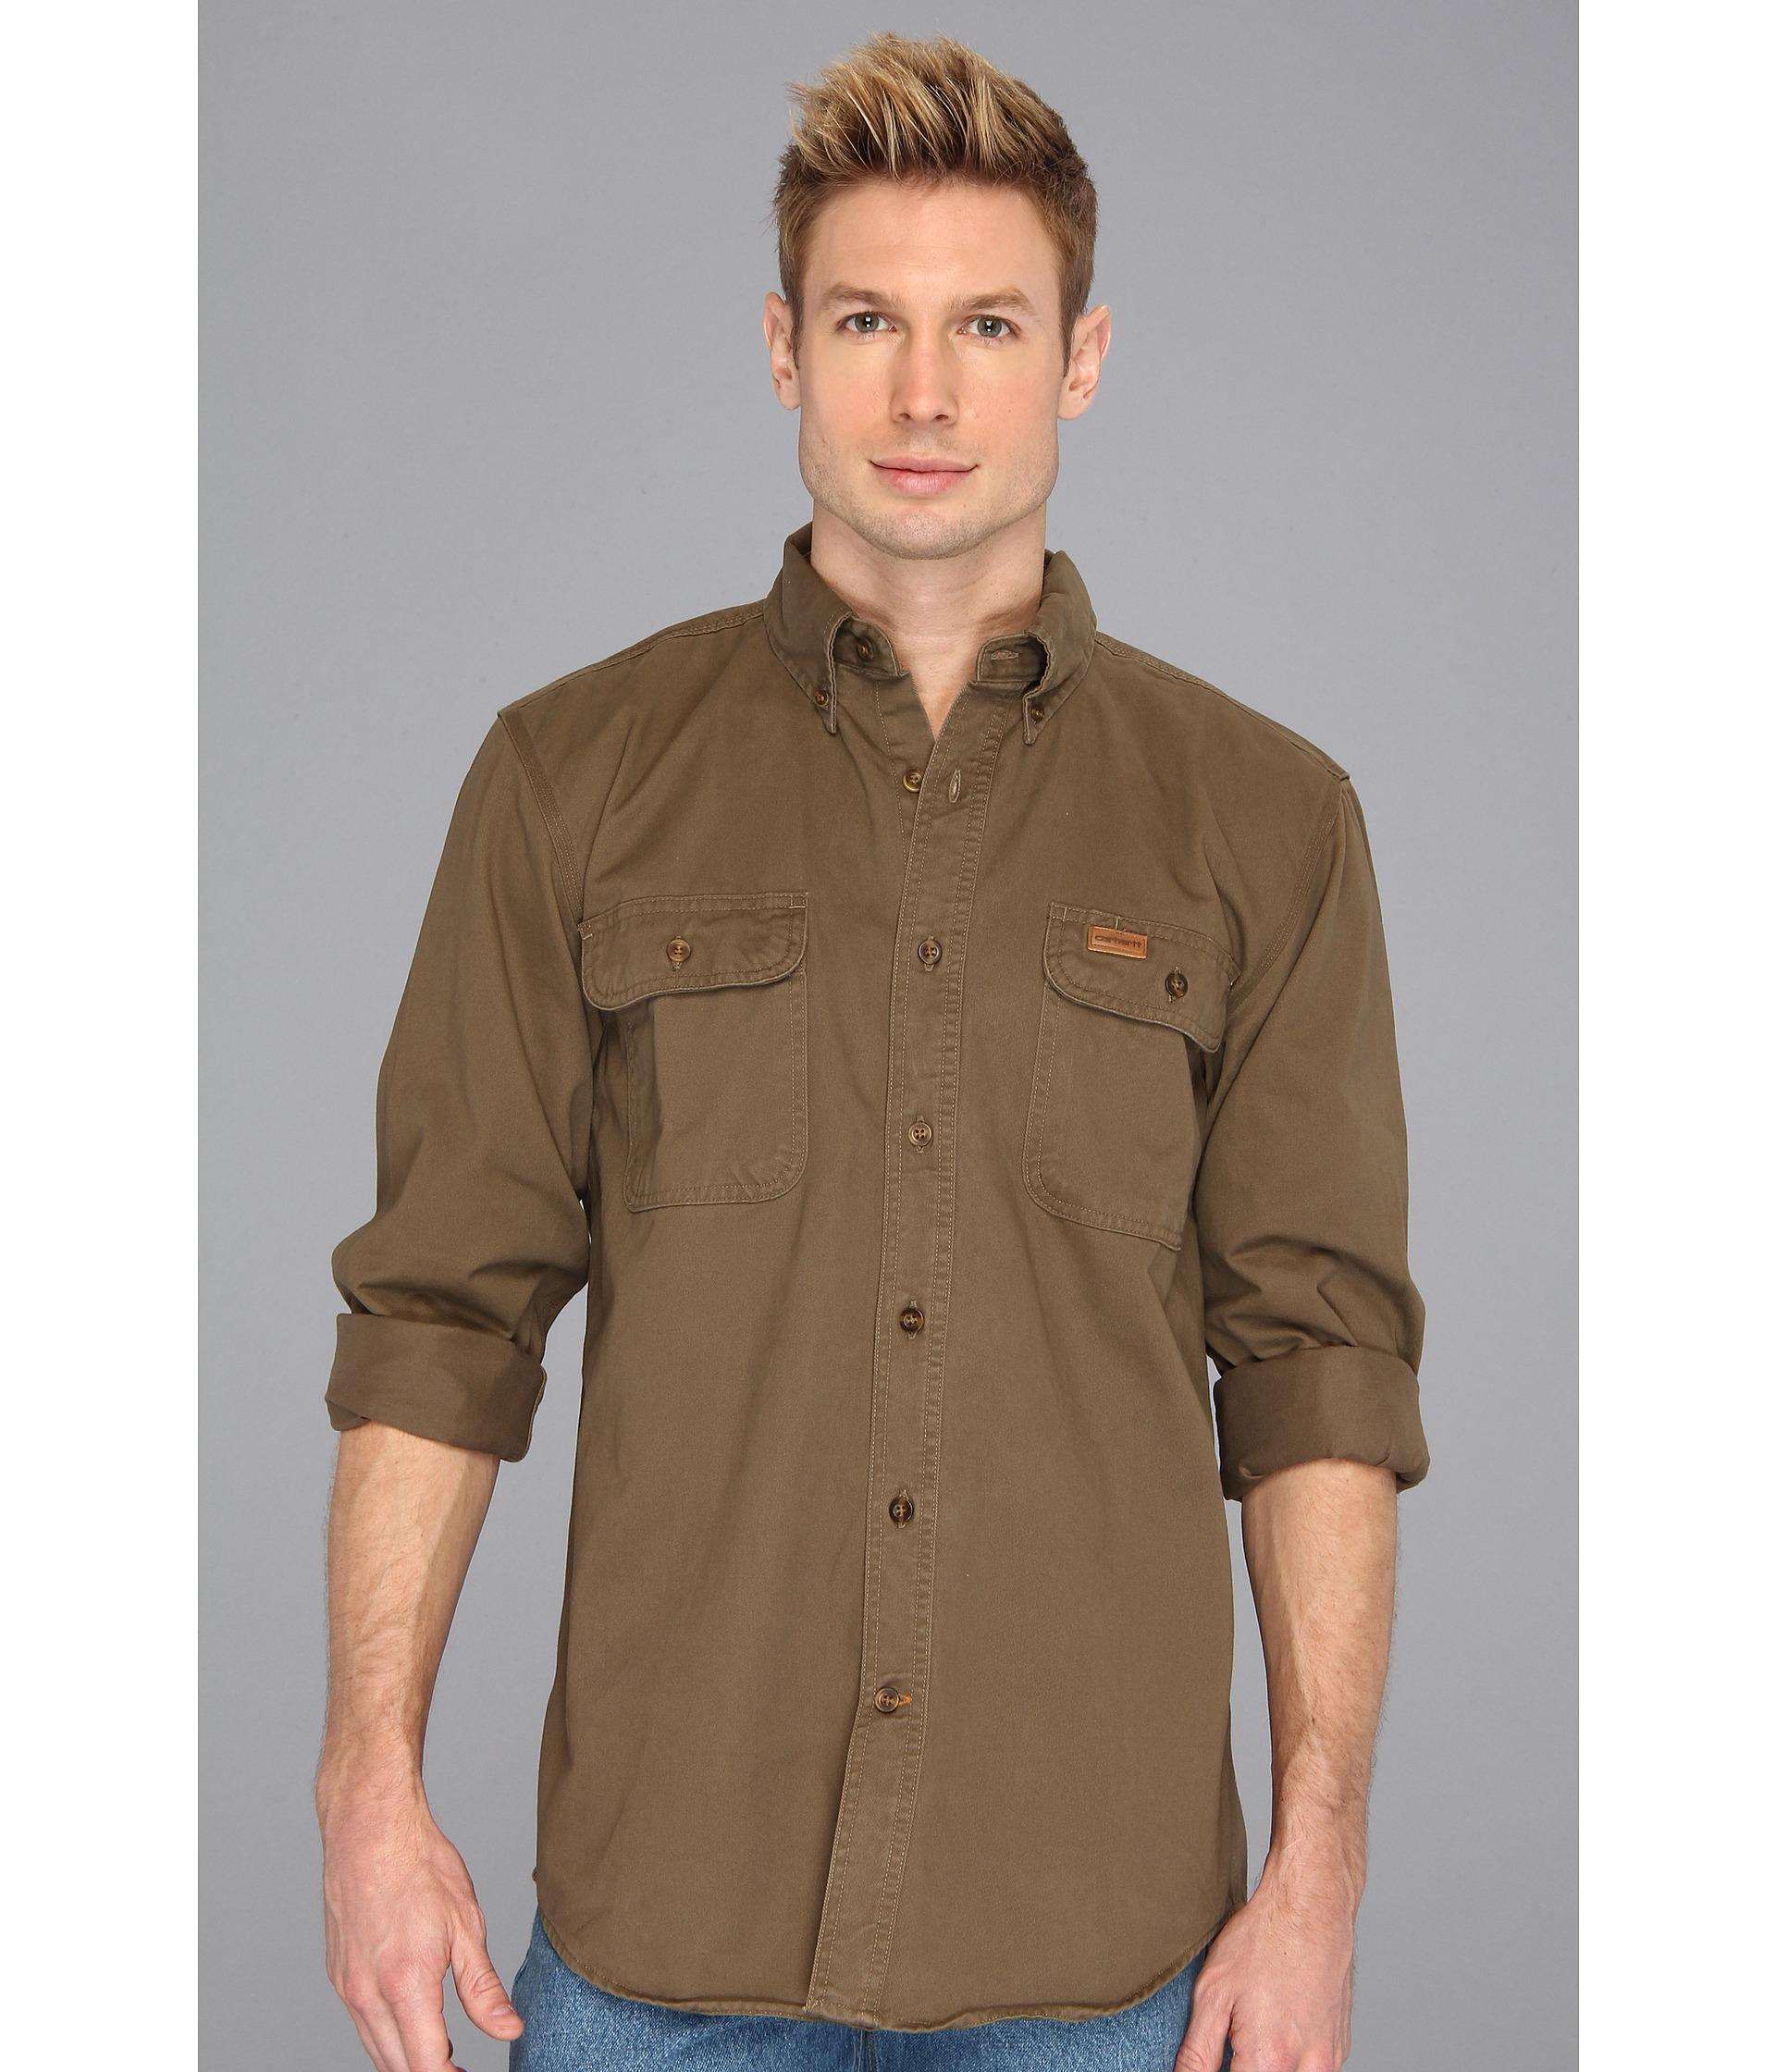 Lyst - Carhartt Sandstone Oakman Work Shirt in Brown for Men